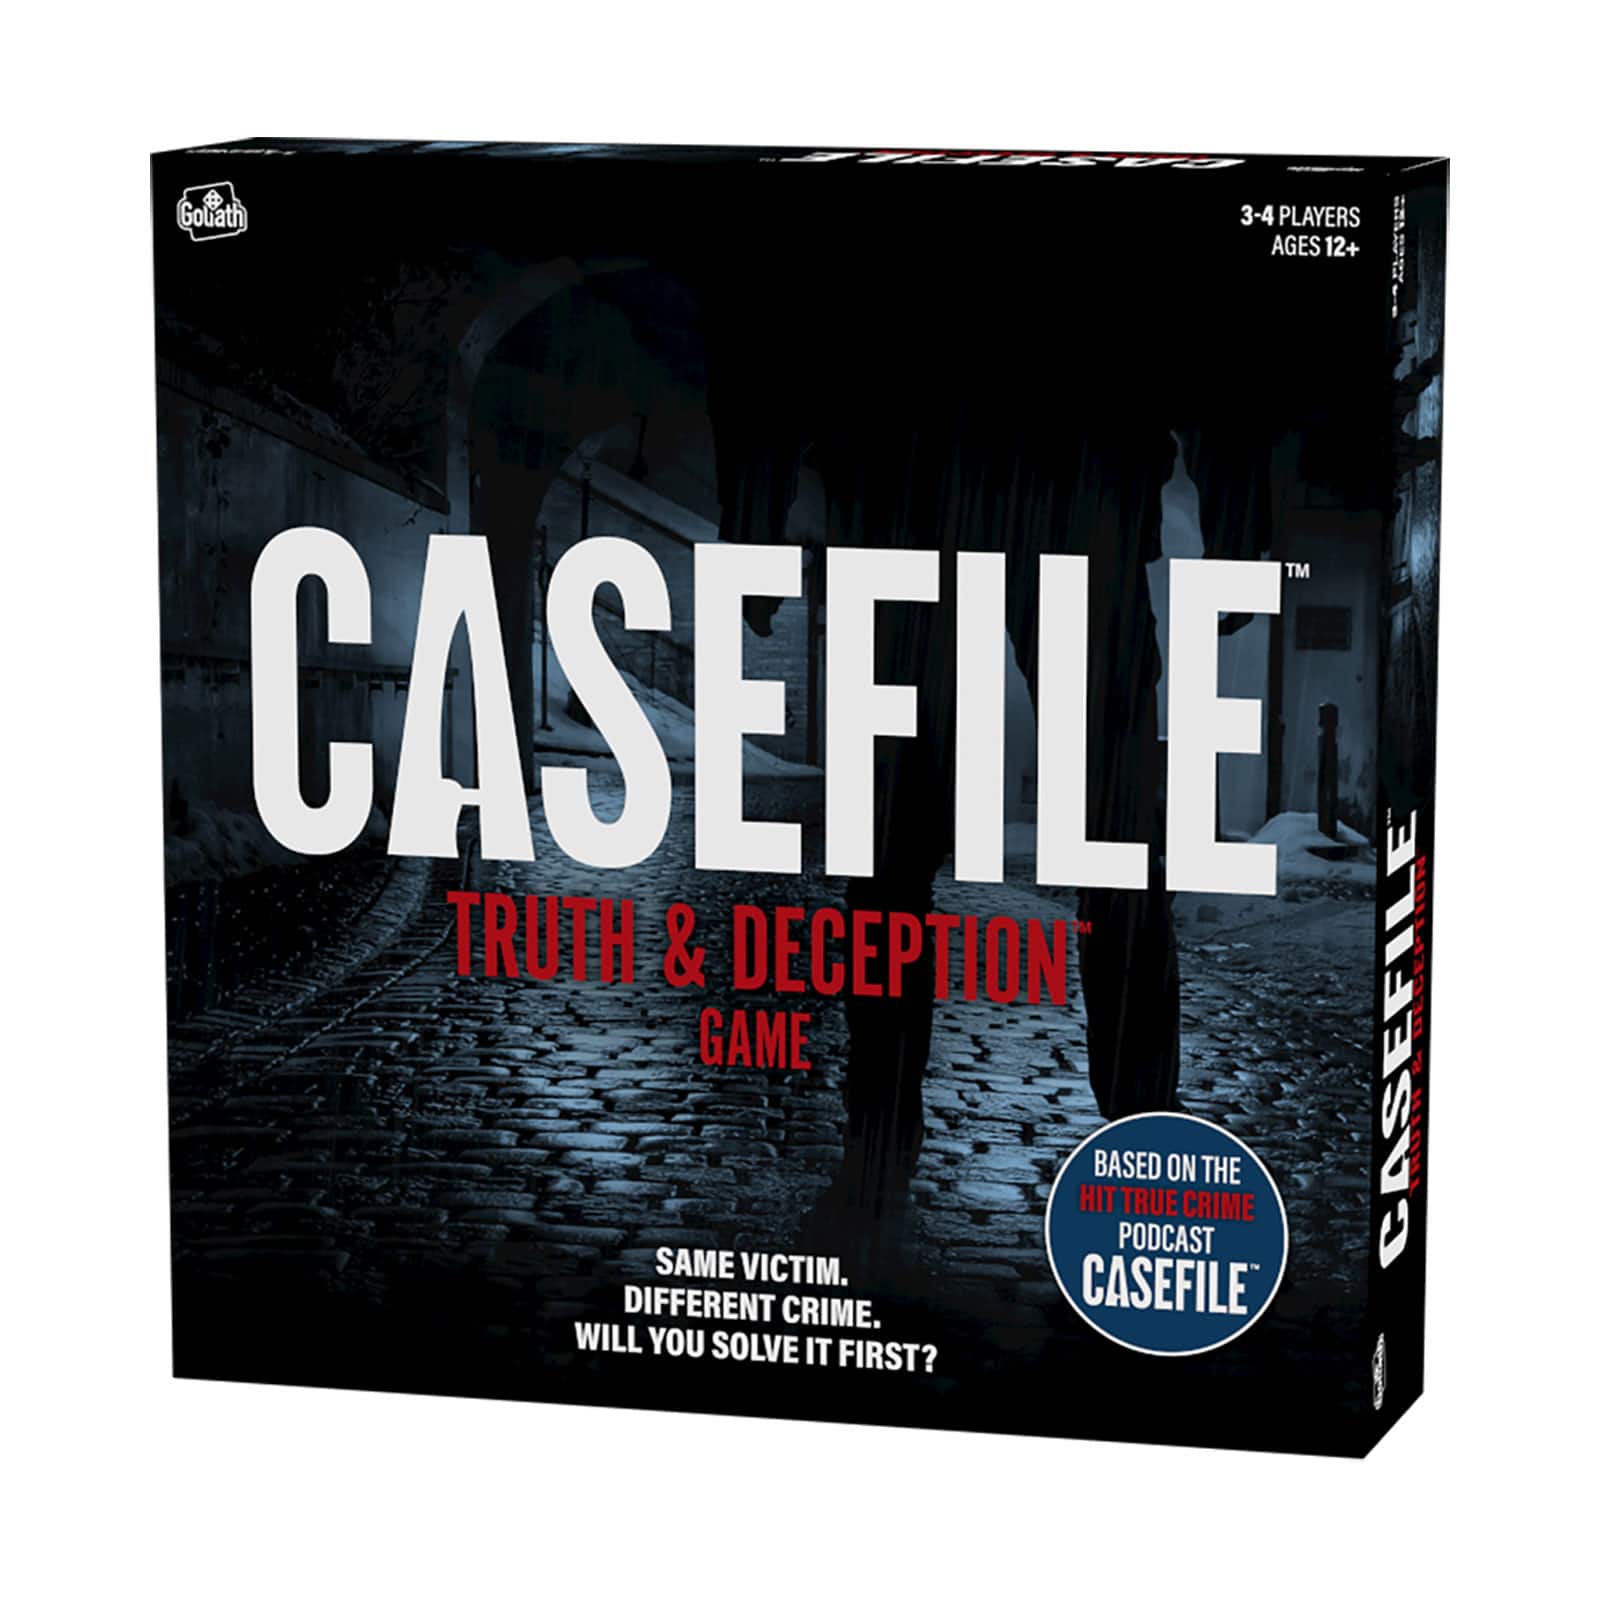 Casefile - Truth &#x26; Deception Game